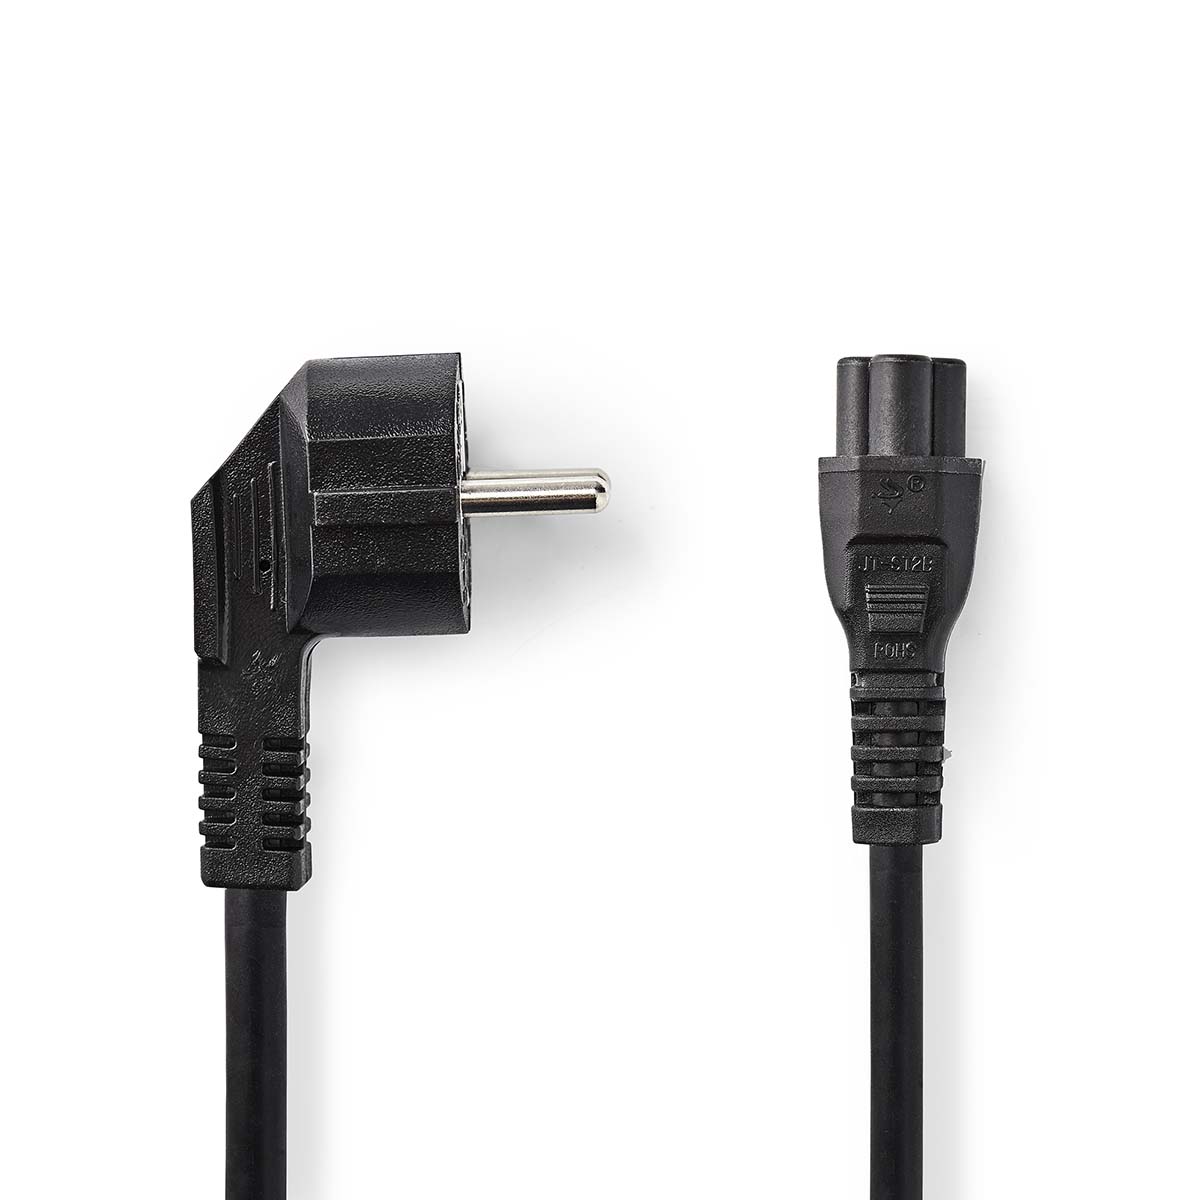 Nedis napájecí kabel zástrčka UNISCHUKO - IEC320-C5 mickey mouse černá, 2 m (CEGL10100BK20)